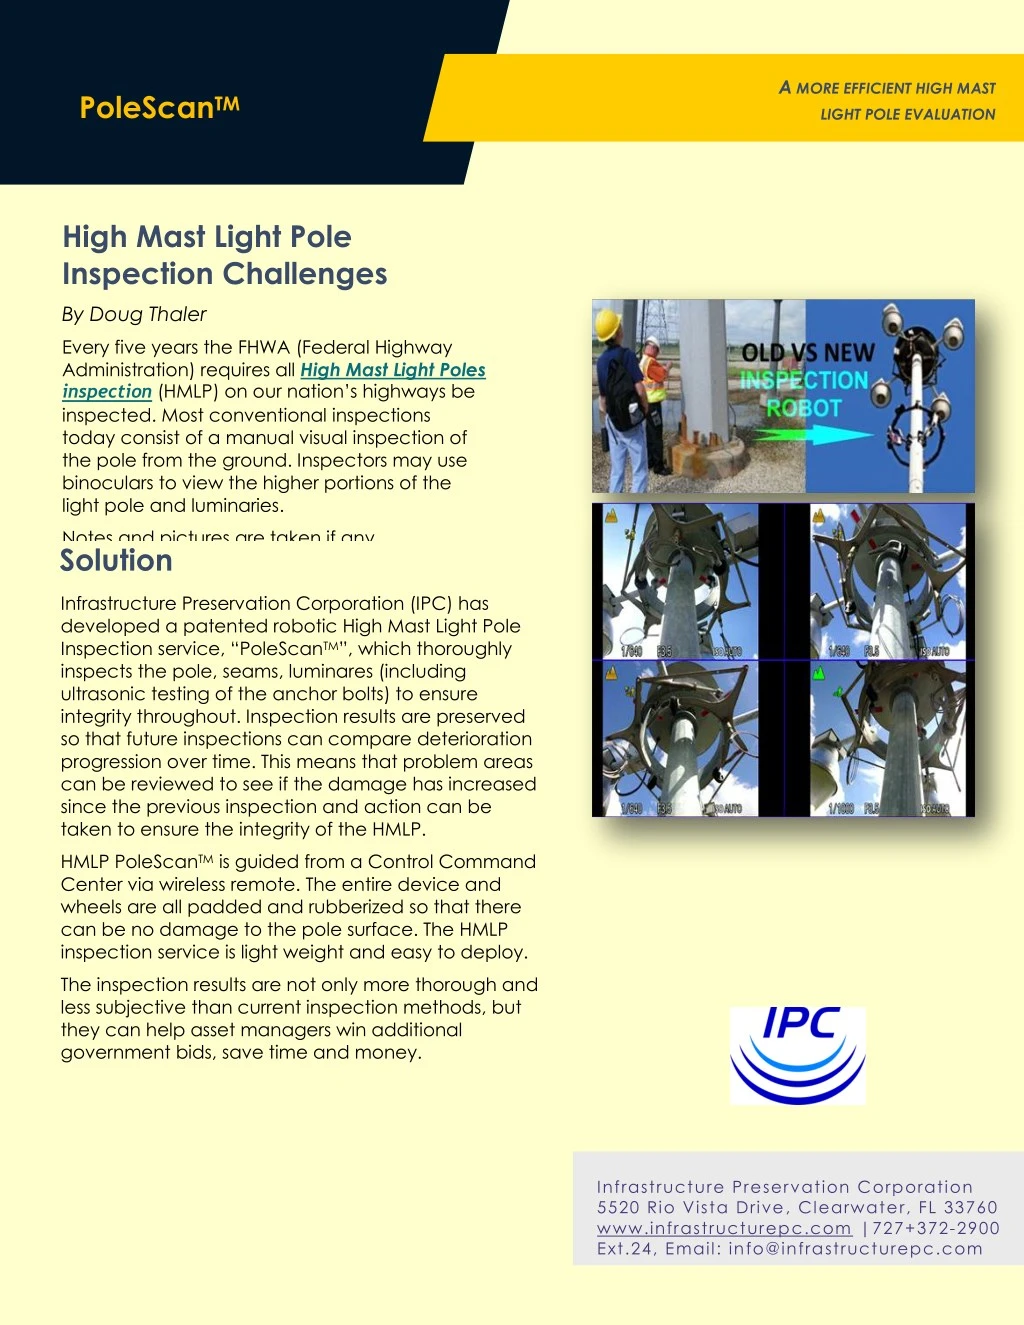 a more efficient high mast light pole evaluation